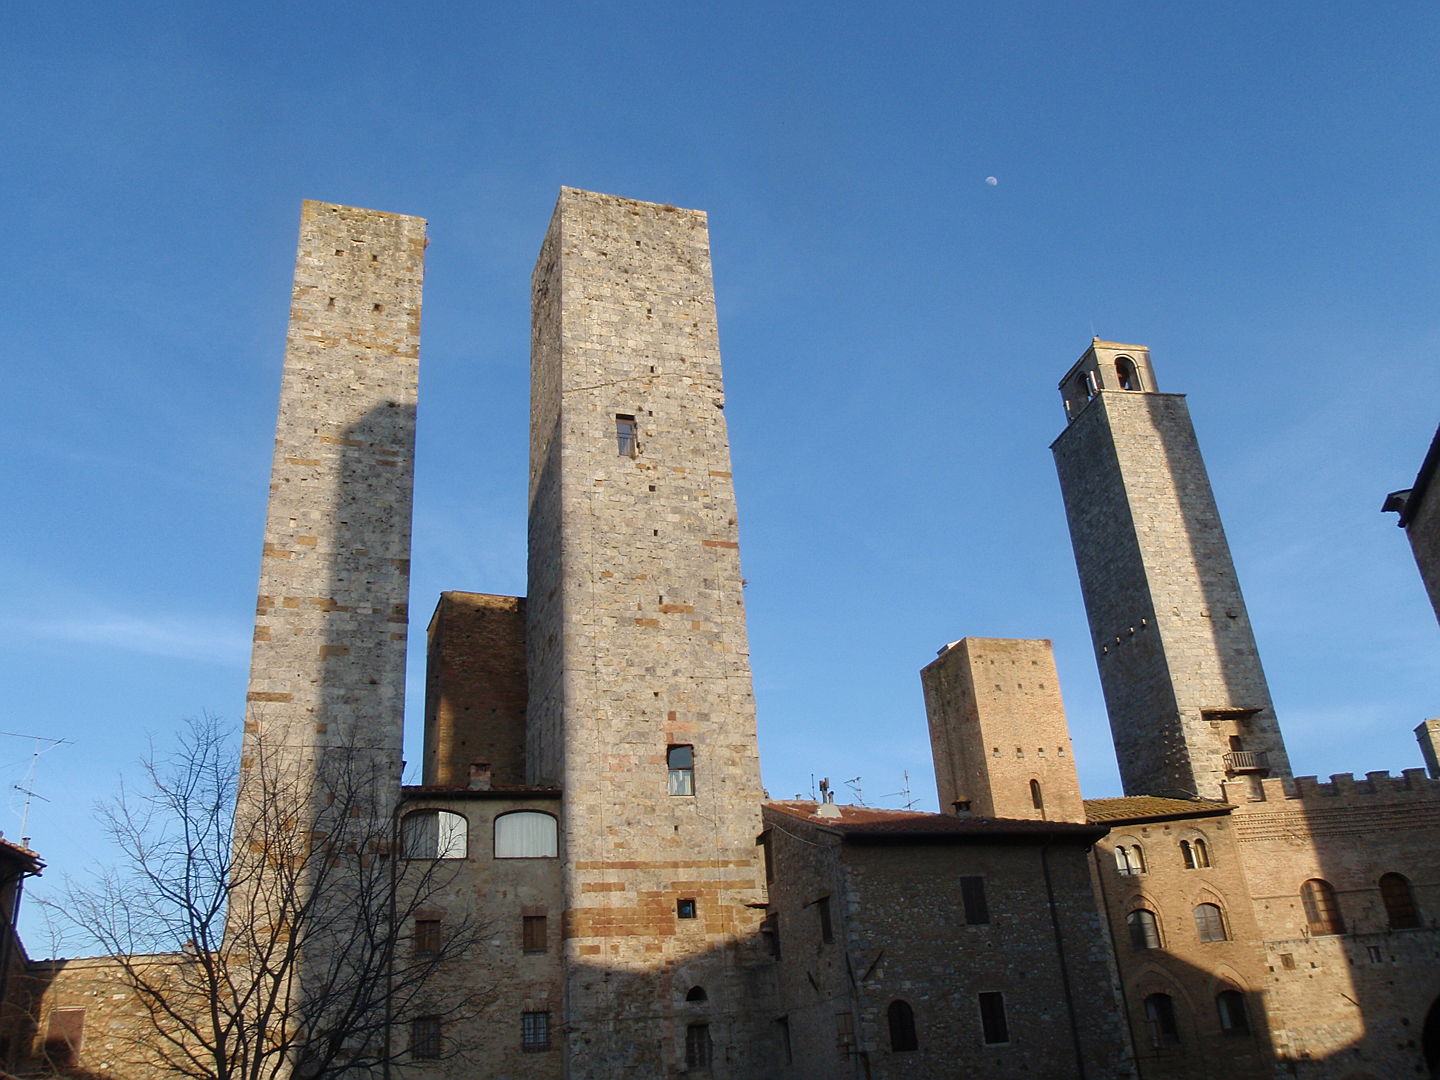  Siena (SI) ITA
- towers-in-san-gimignano.jpg